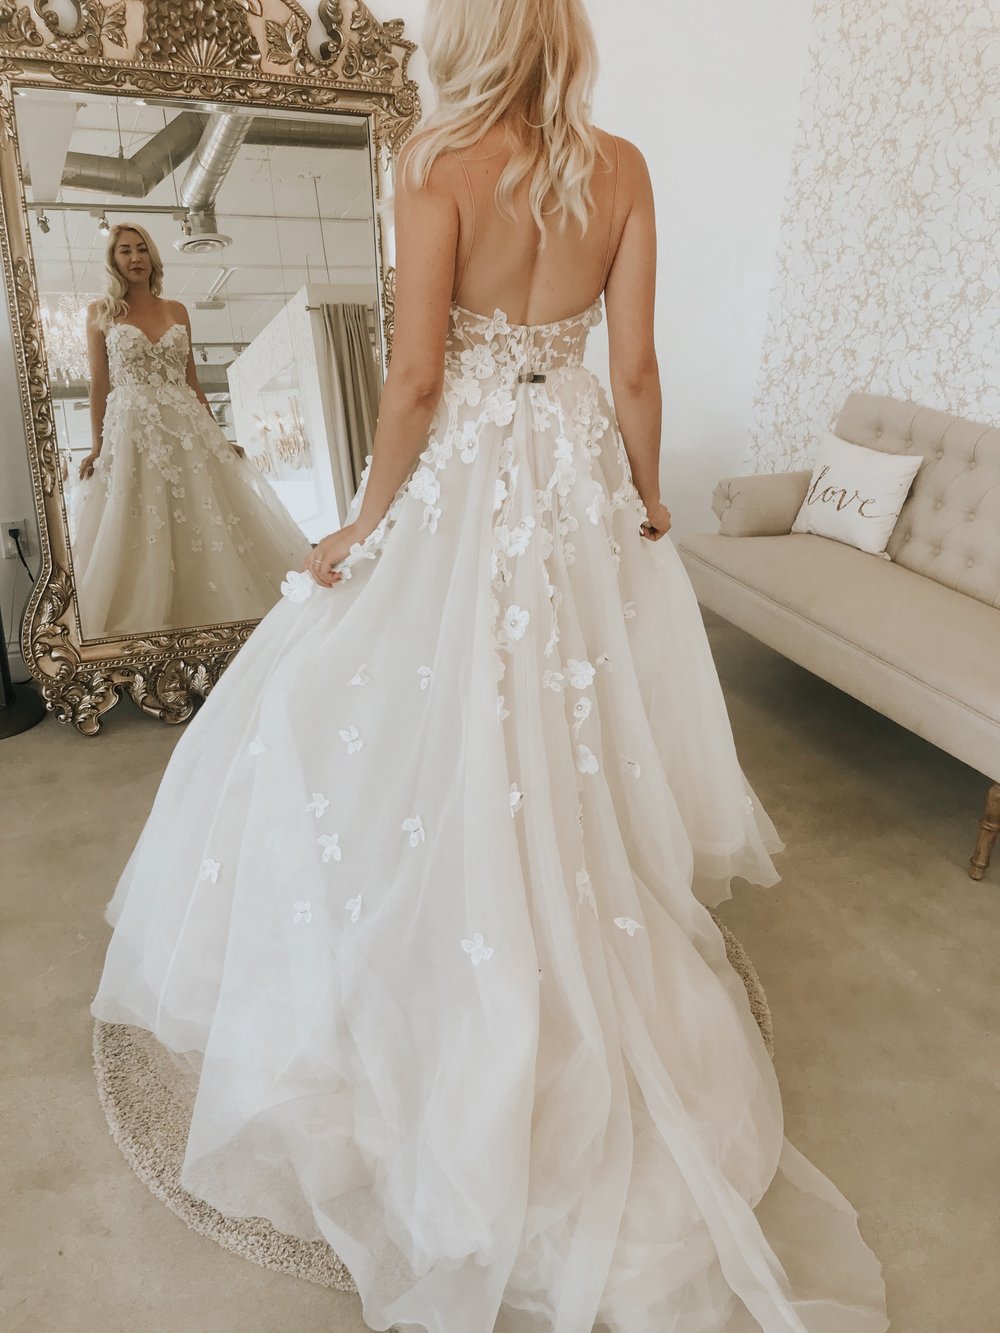 ADVENTURE DIARY: WEDDING DRESS SHOPPING AT KINSLEY JAMES — Alyssa Tabit ...